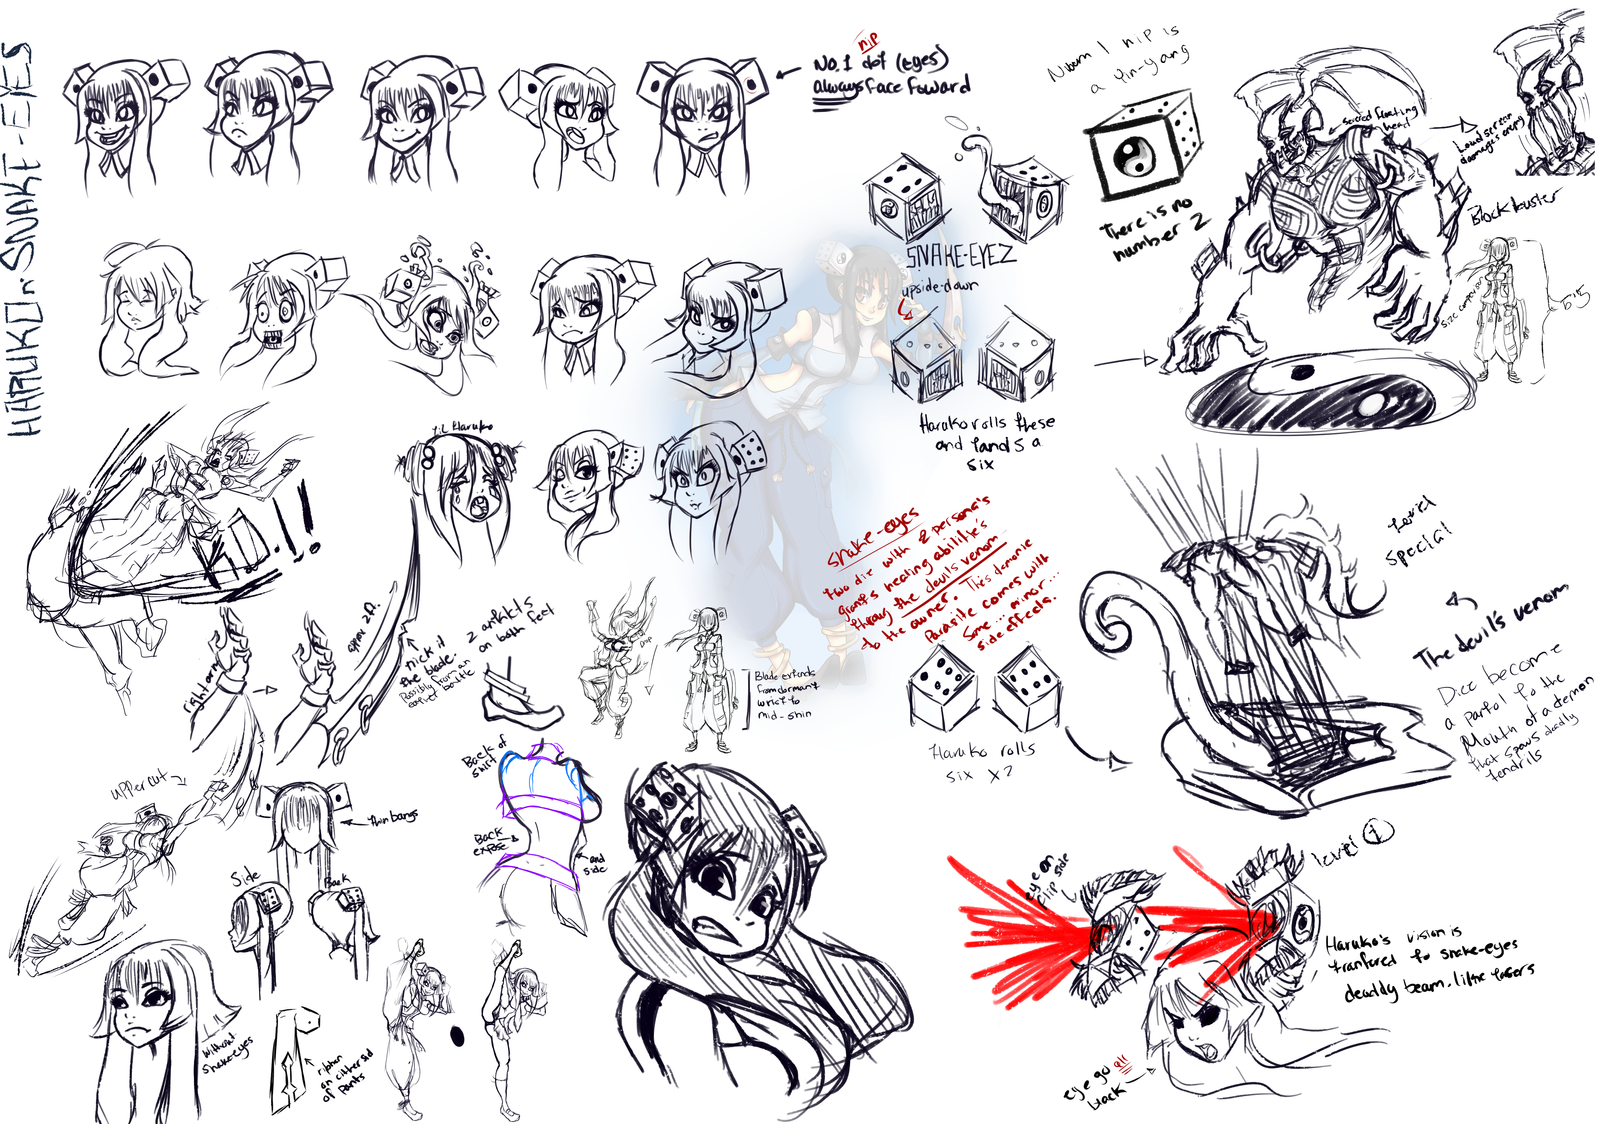 Haruko and Snake-eyes Character sheet